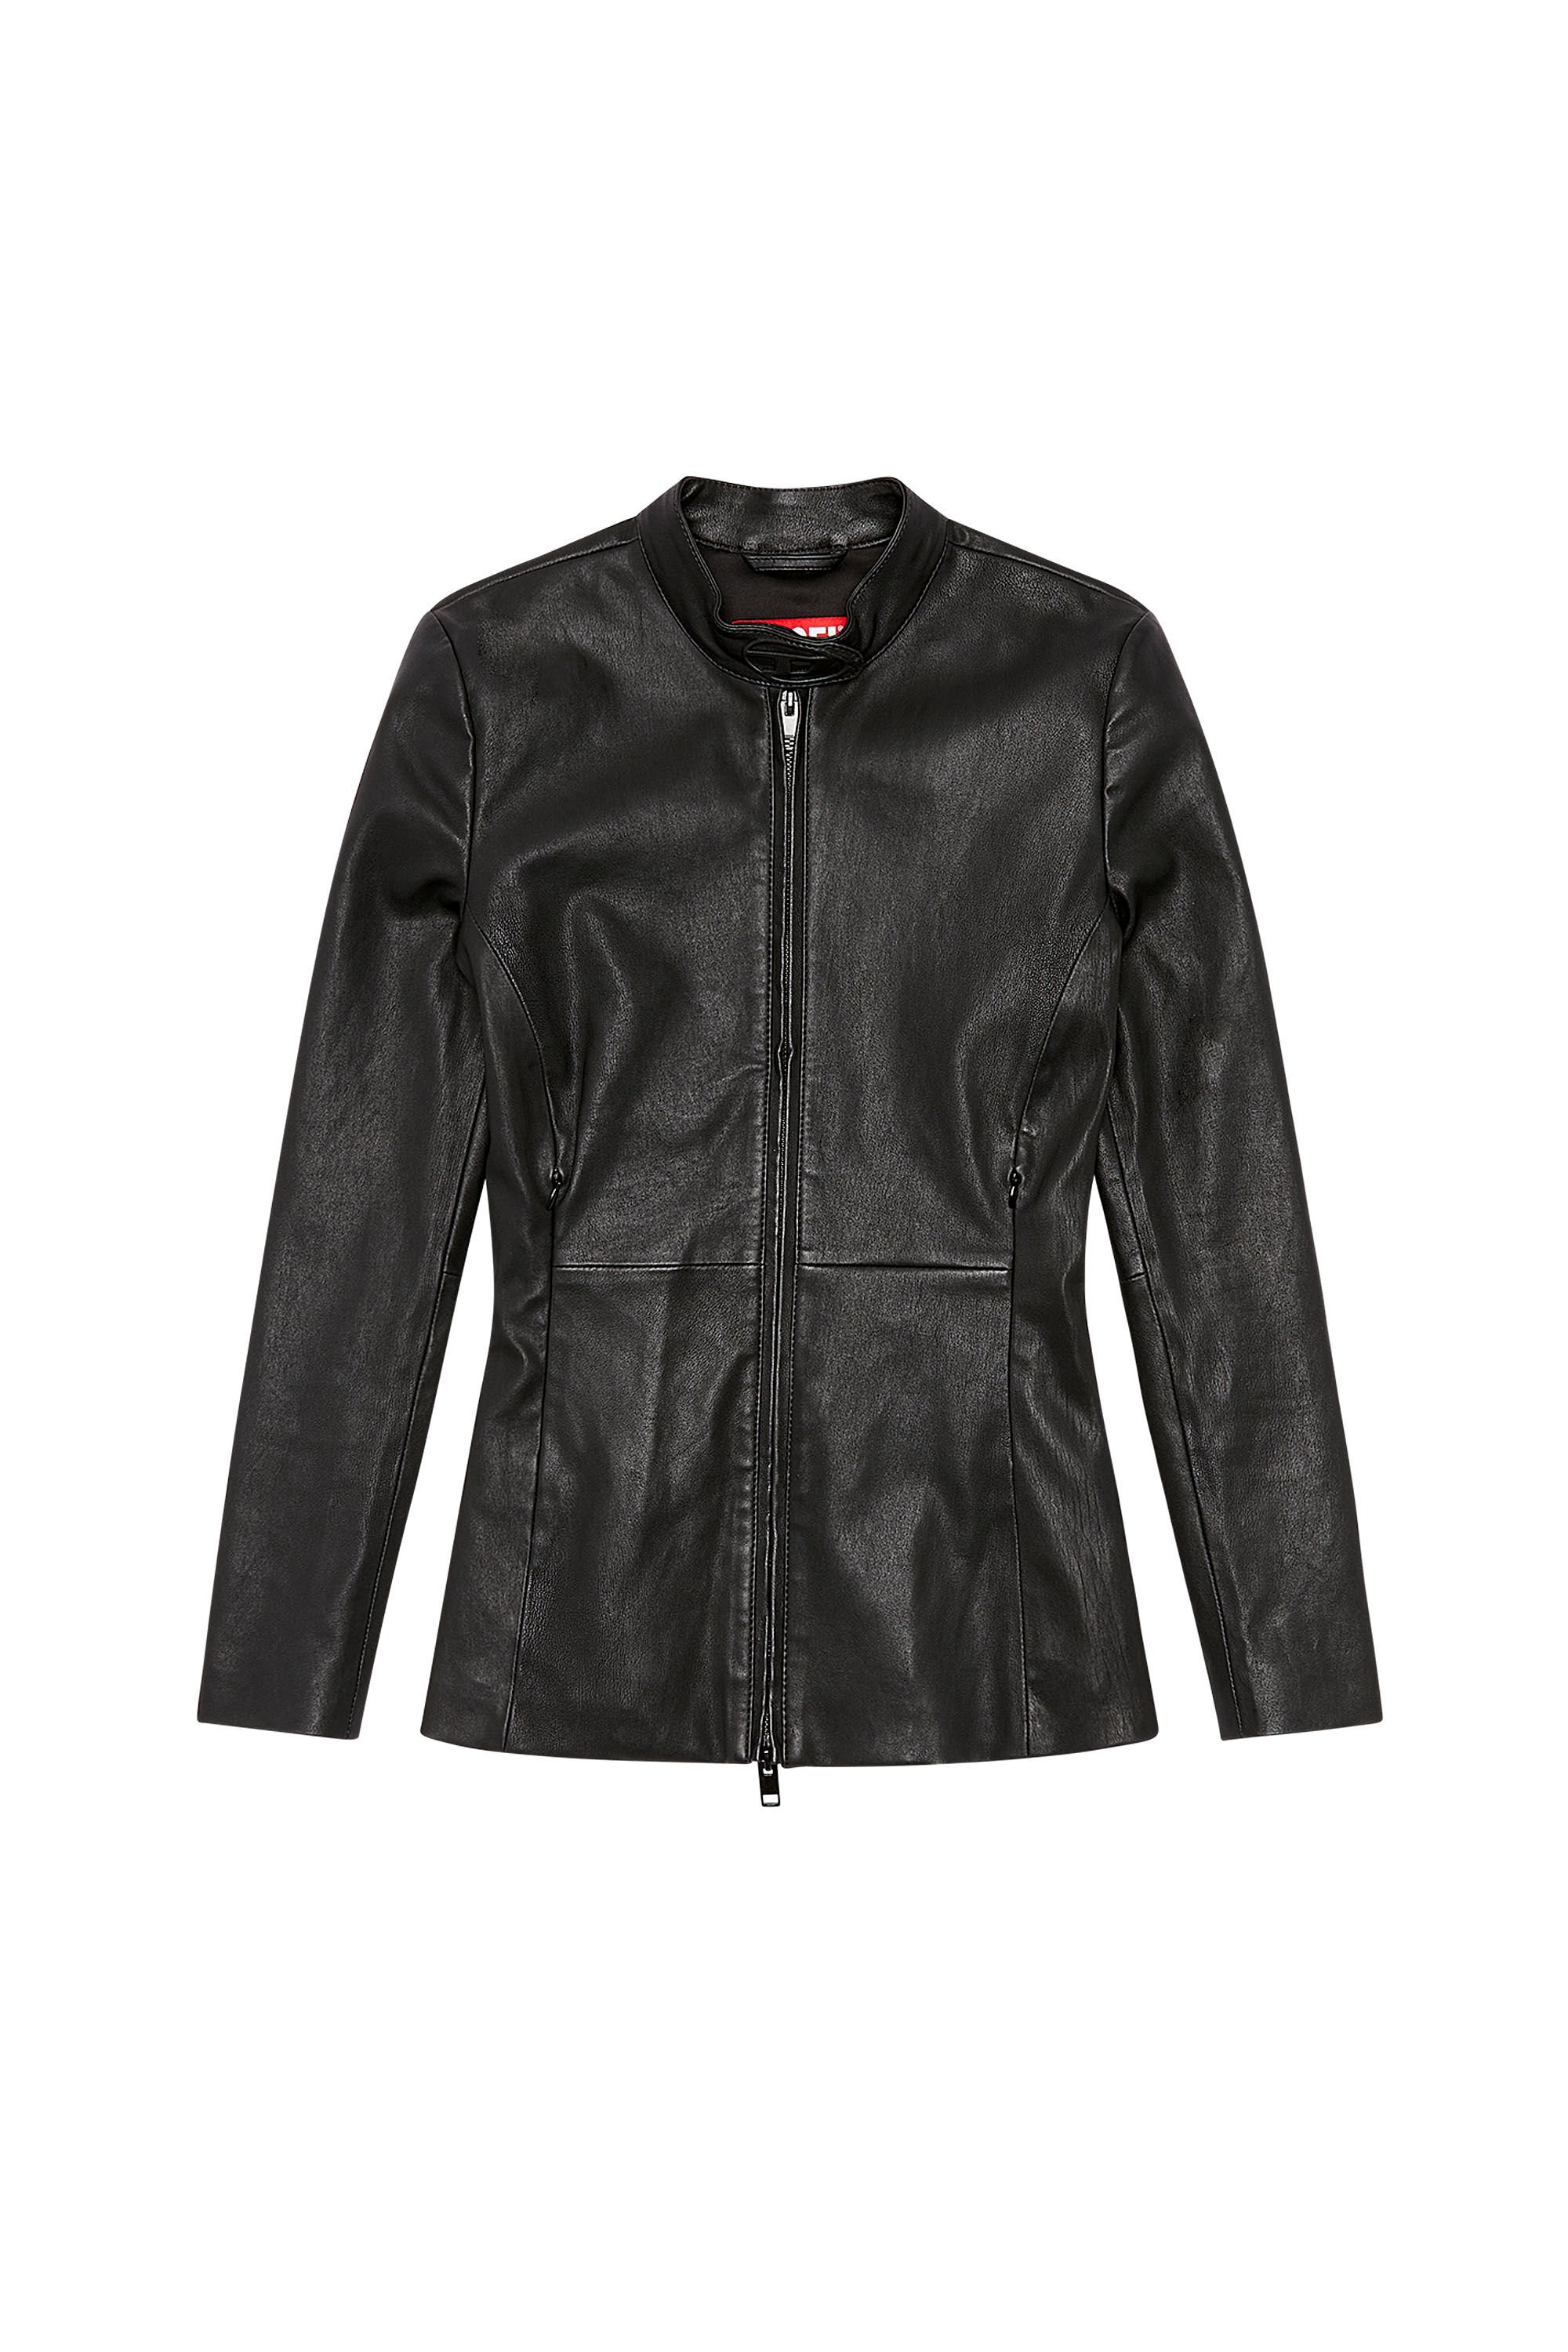 Diesel - L-SORY-N1, Woman Stretch-leather jacket in Black - Image 2